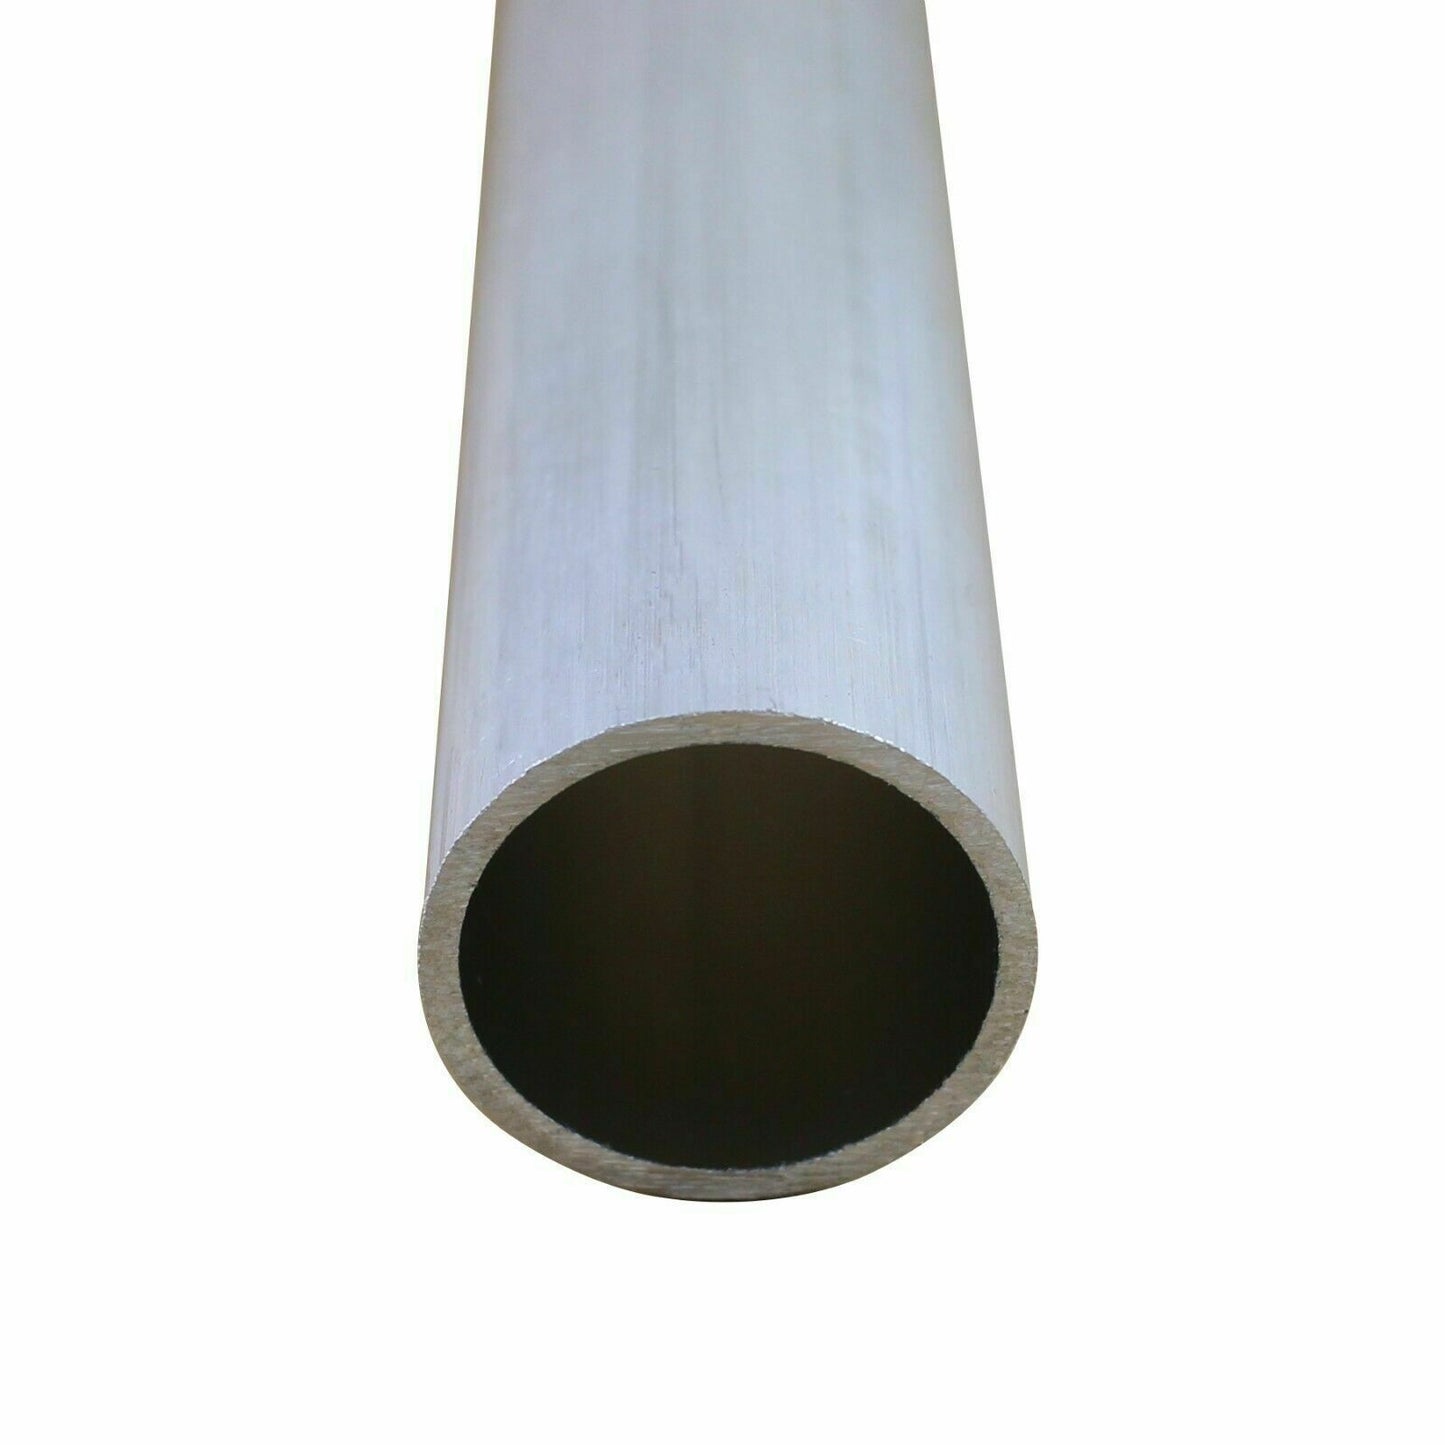 OD 28 mm ID 22 mm 1 Pcs Aluminum Round Tube Pipe